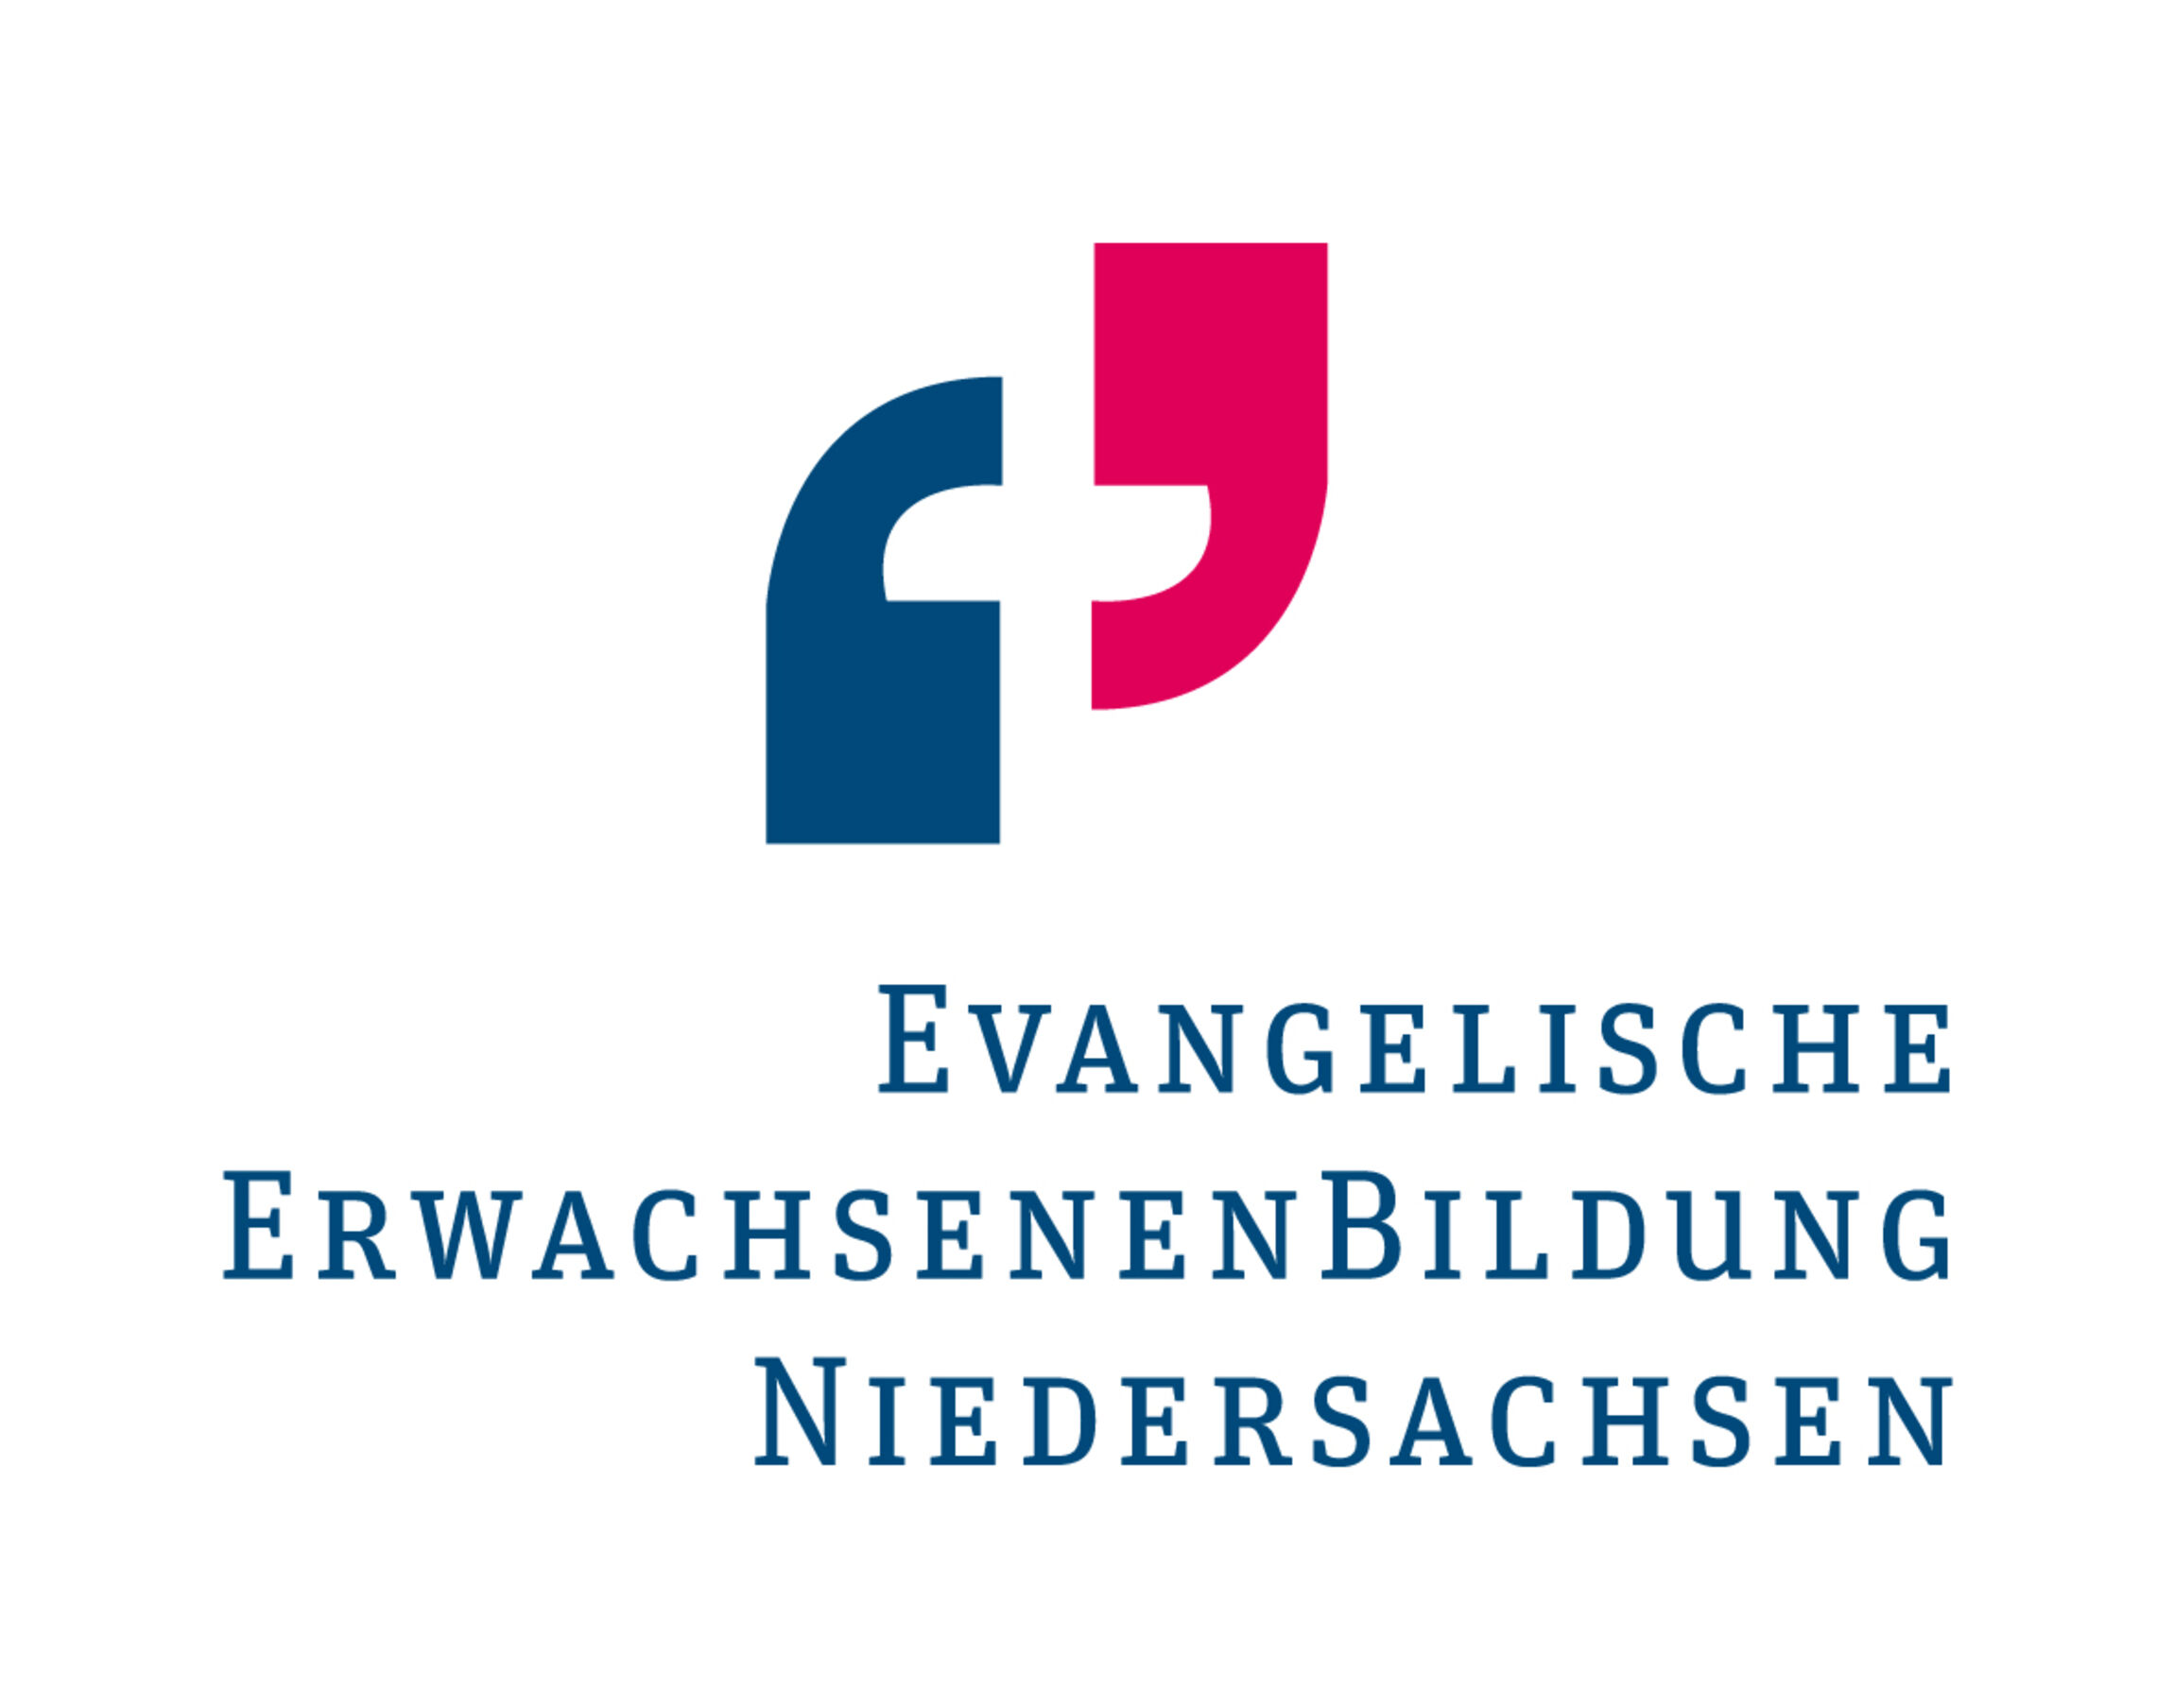 EEB - Evangelische Erwachsenenbildung Niedersachsen